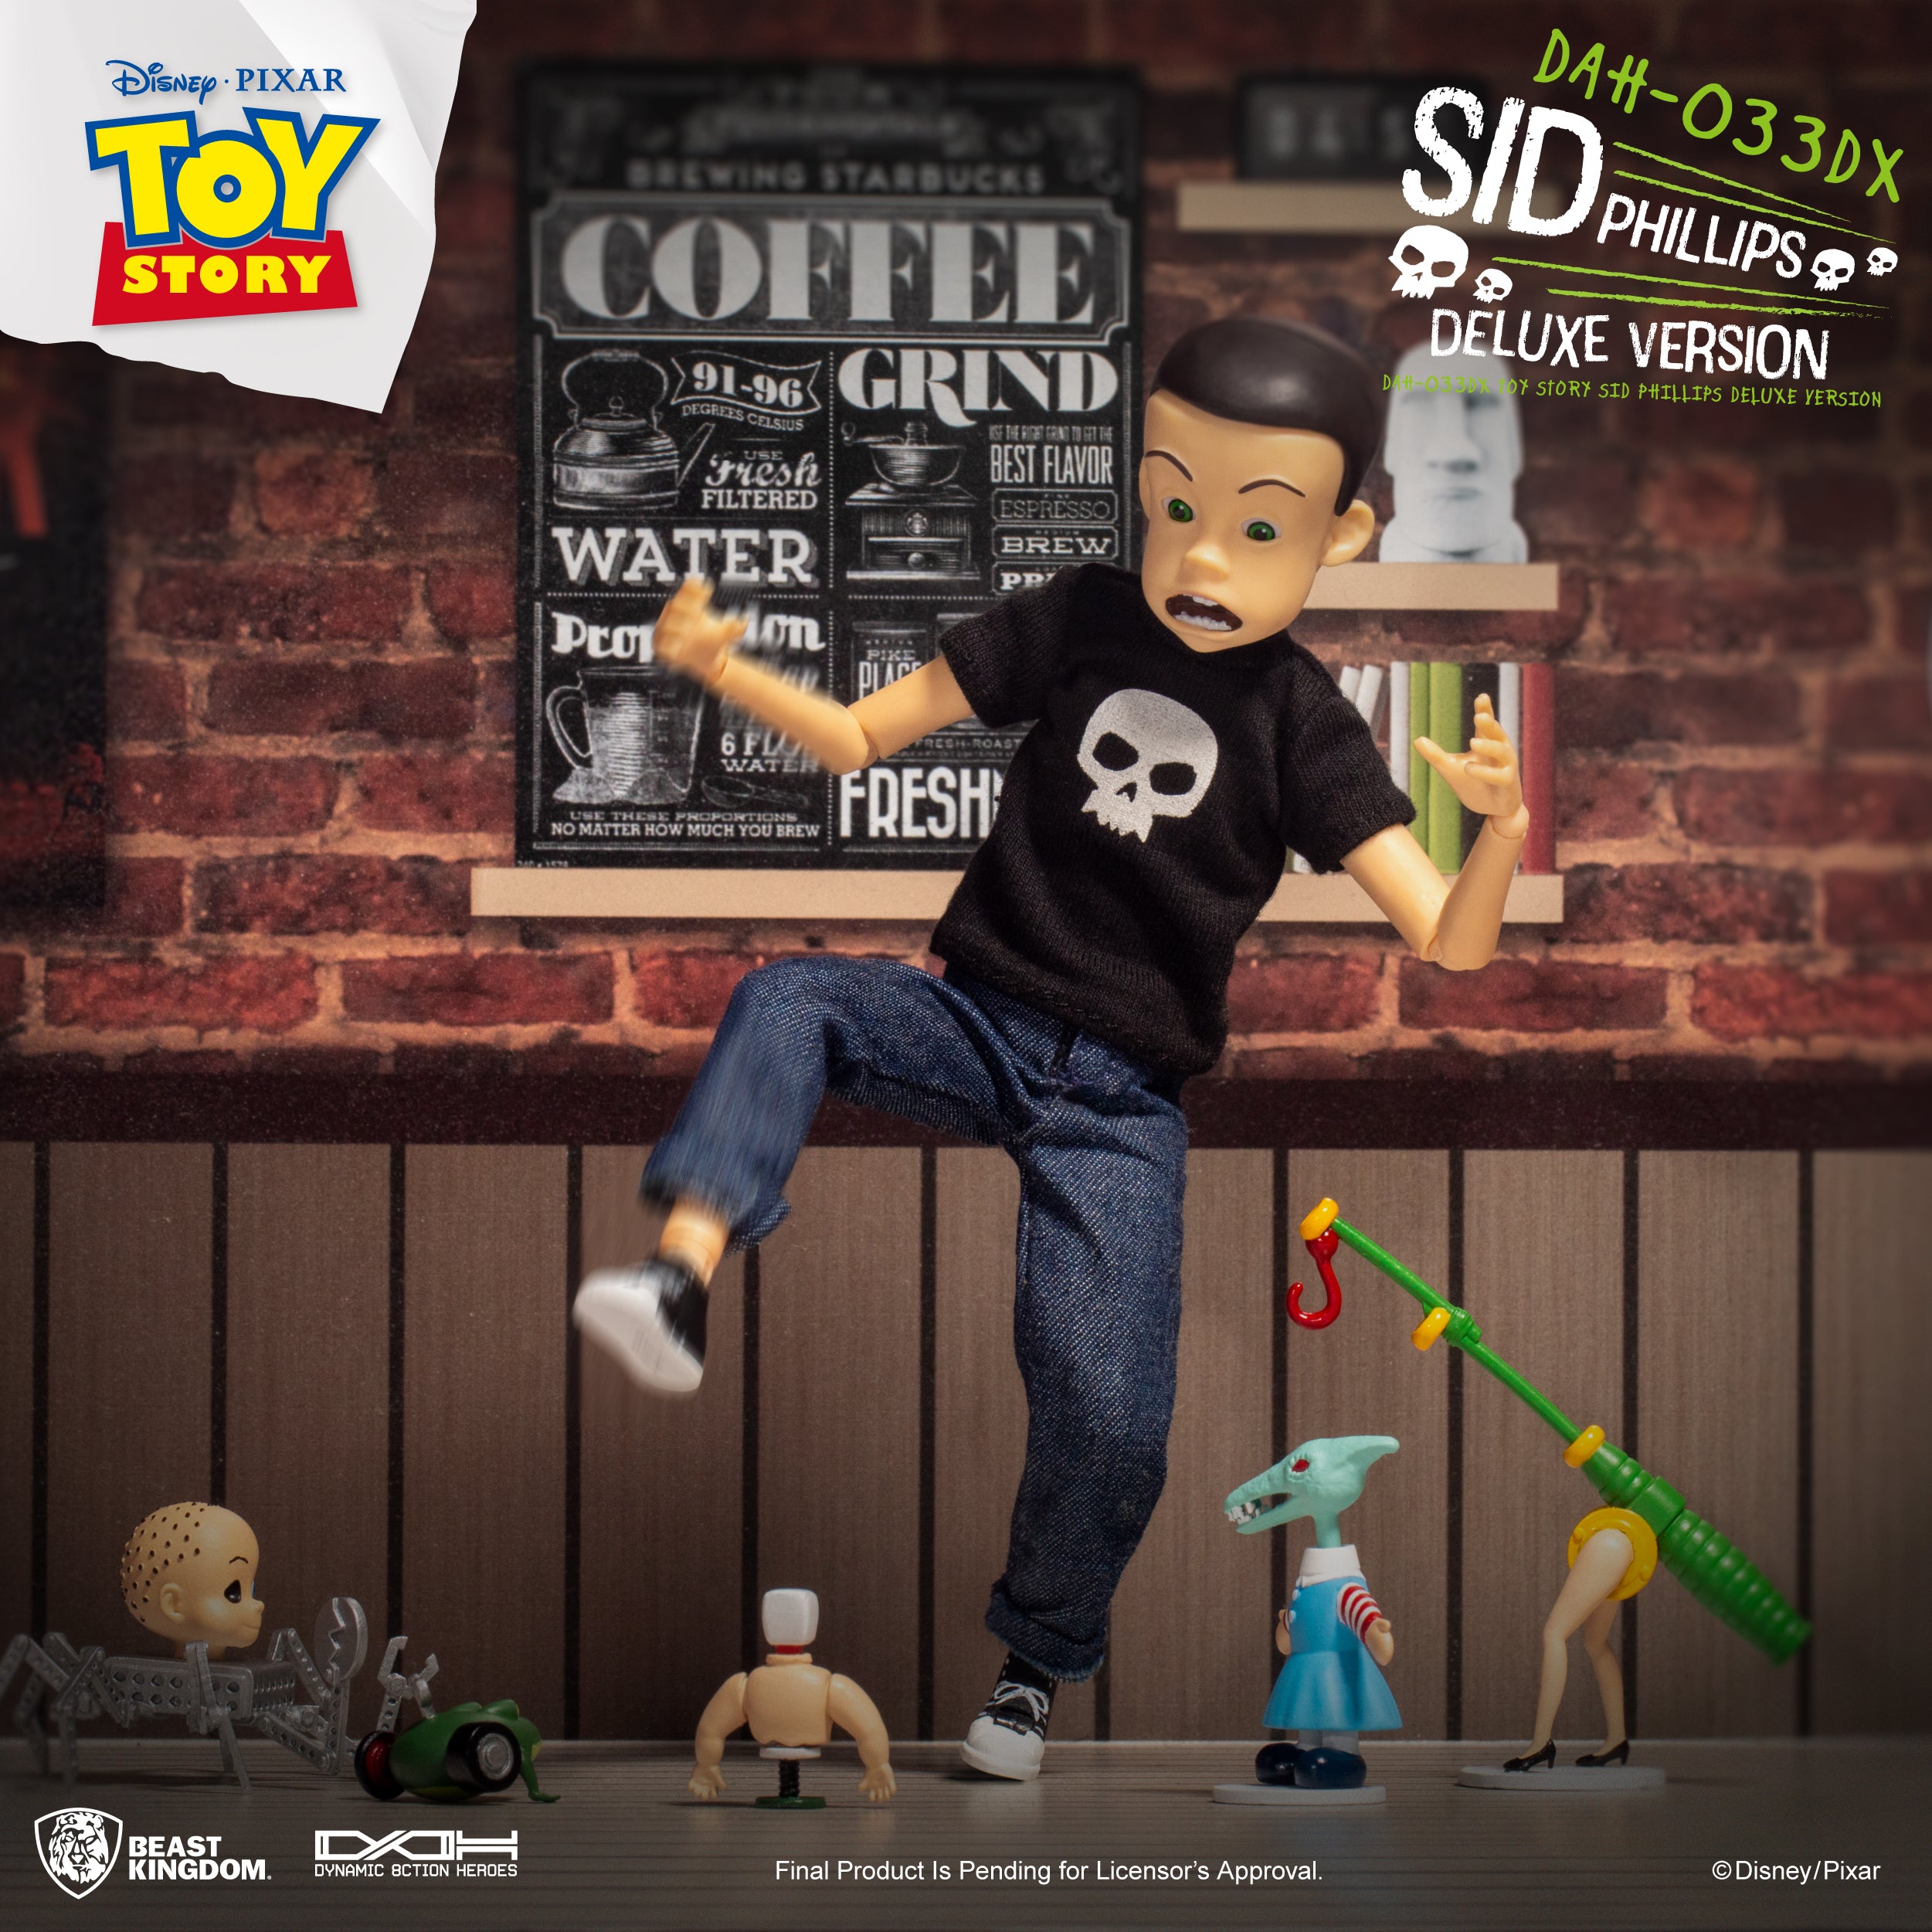 Beast Kingdom DAH-033DX Disney Pixar TOY STORY Sid Phillips 1:9 Scale Dynamic 8ction Heroes Action Figure